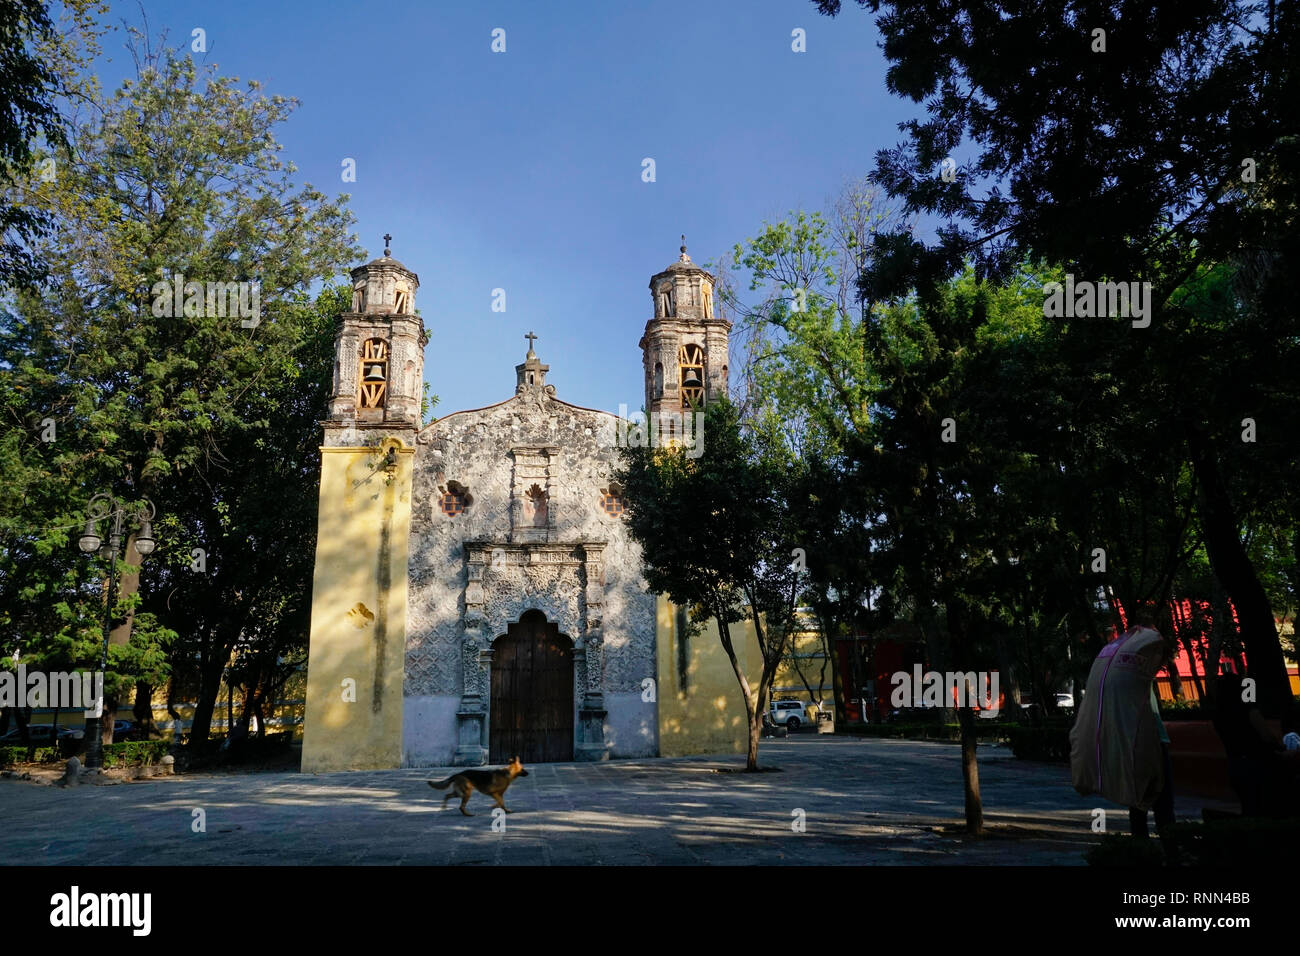 Capilla de La Conchita in der Plaza de la Conchita durch Hernan Cortes im Jahre 1525 gebaut, Coyoacan Nachbarschaft von Mexiko City, Mexiko. Stockfoto